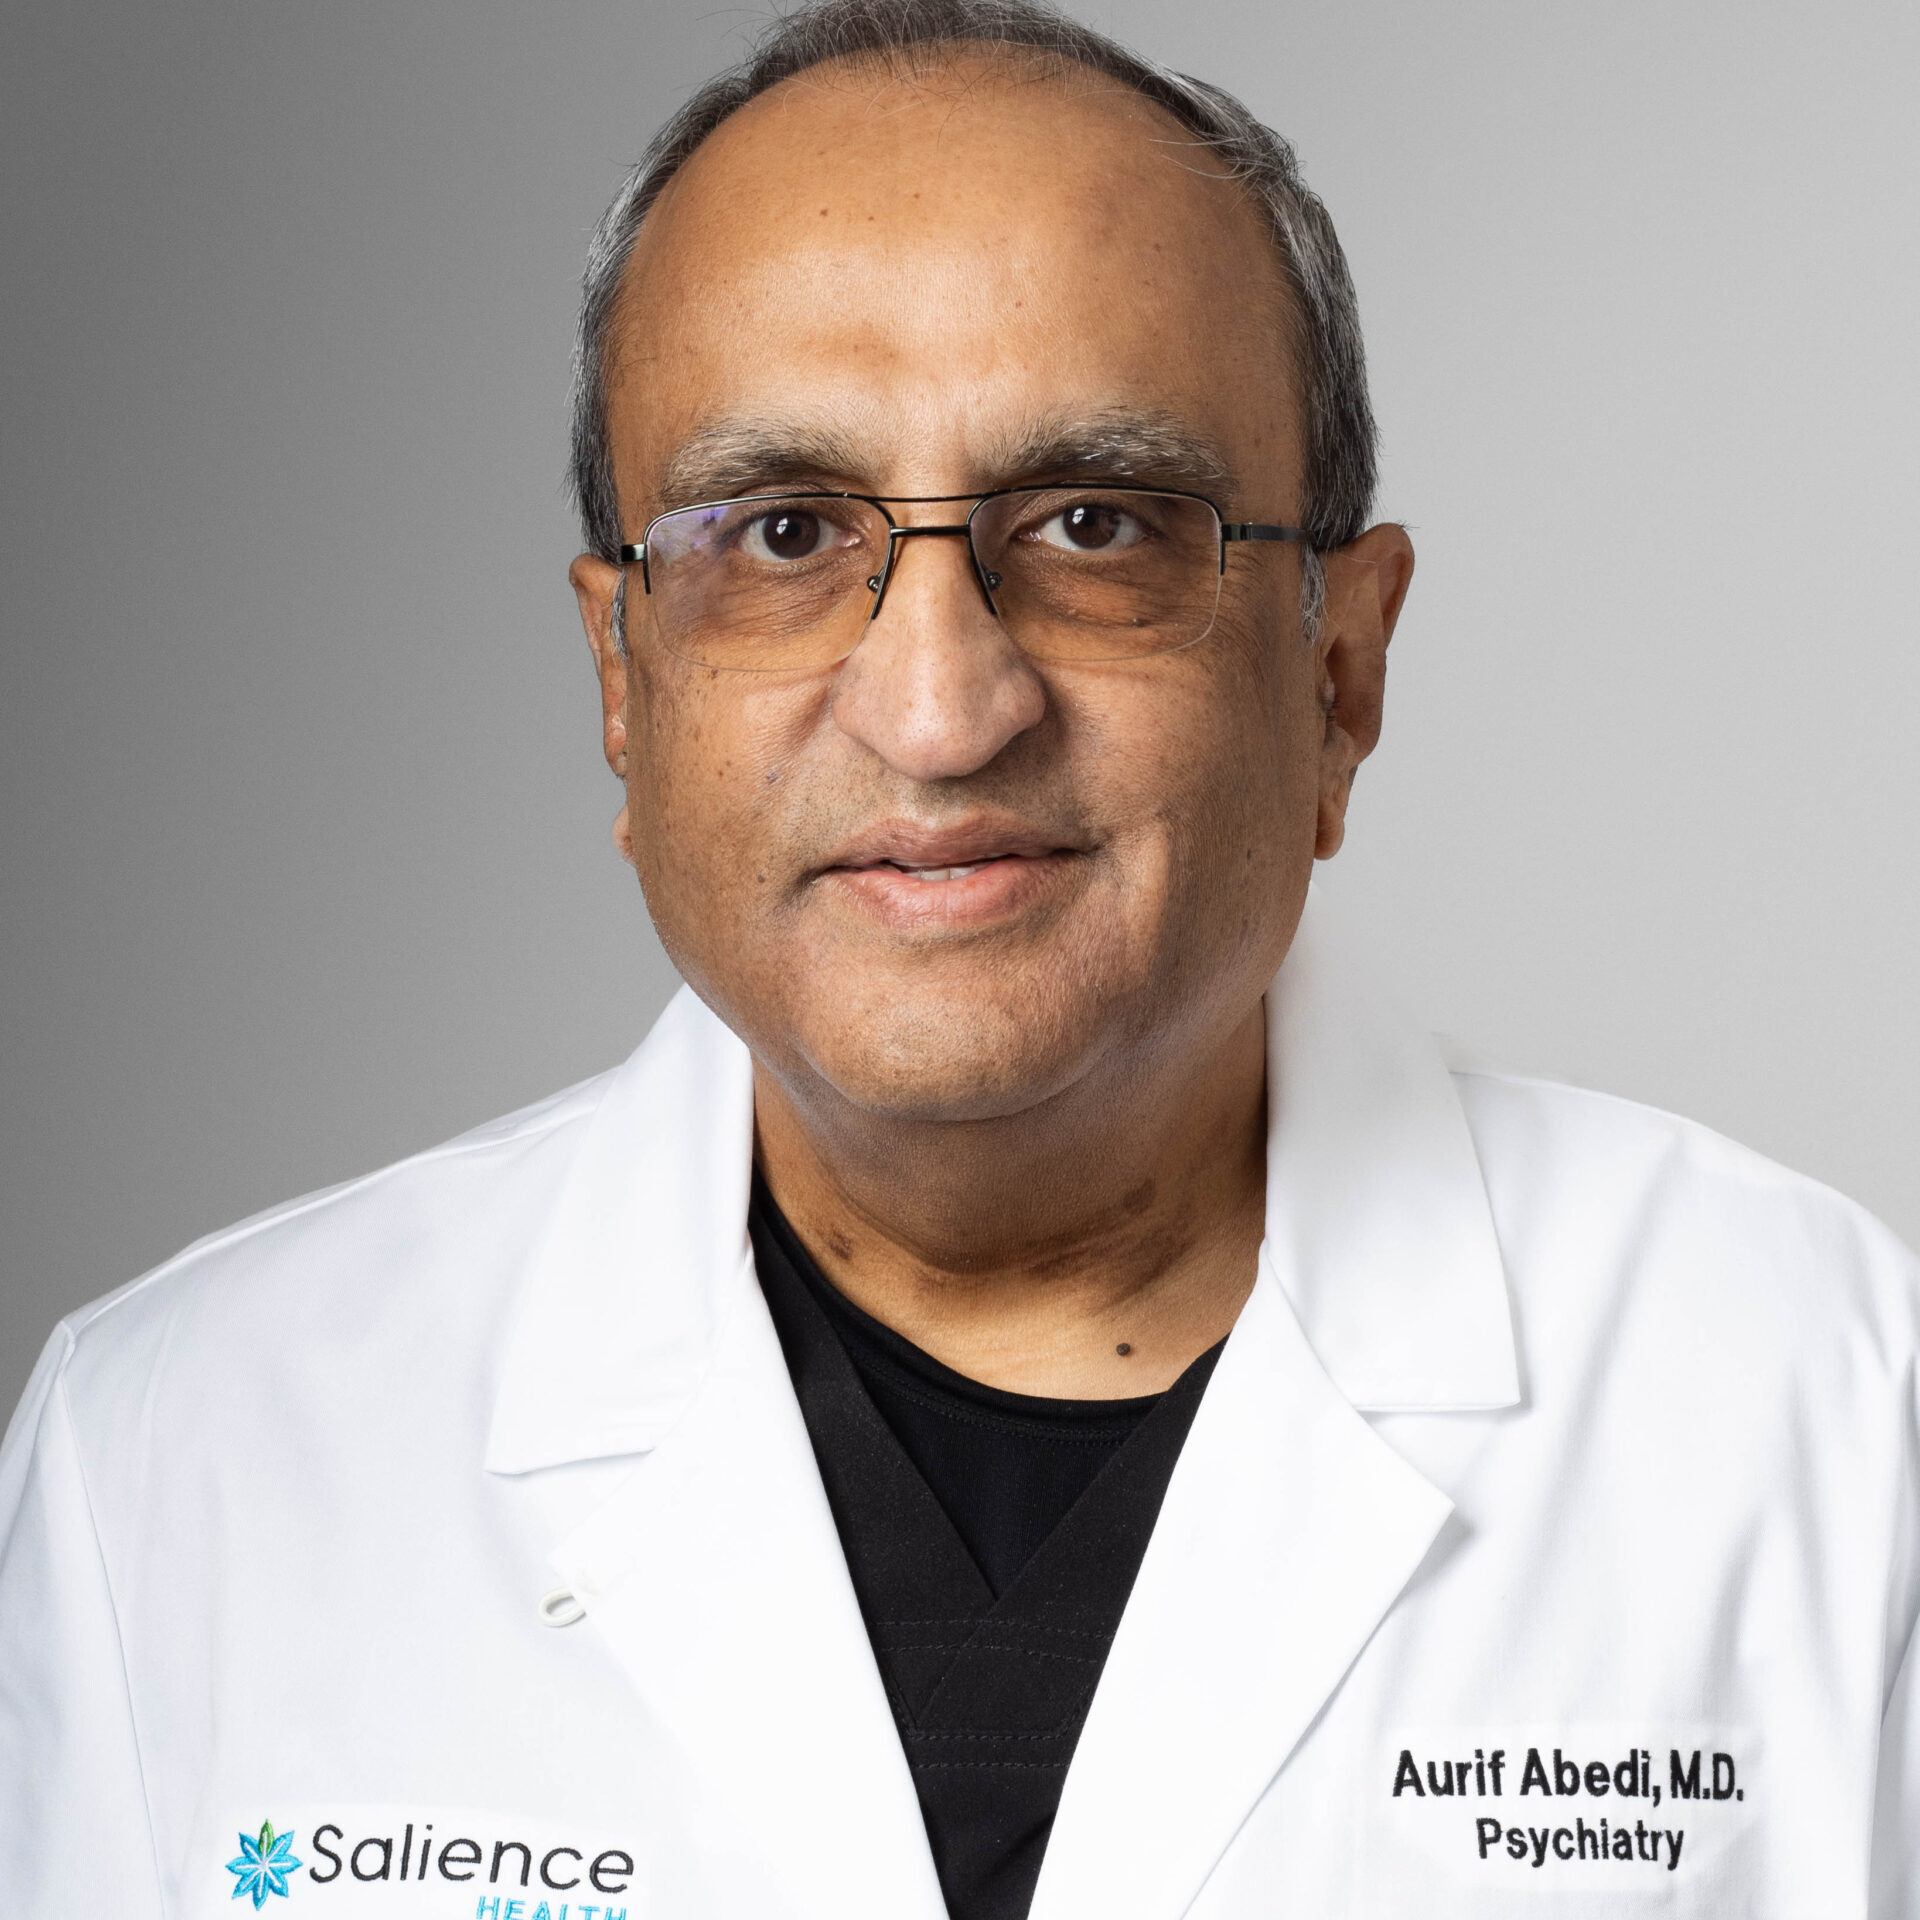 Dr. Aurif Abedi, Psychiatrist at Salience Health